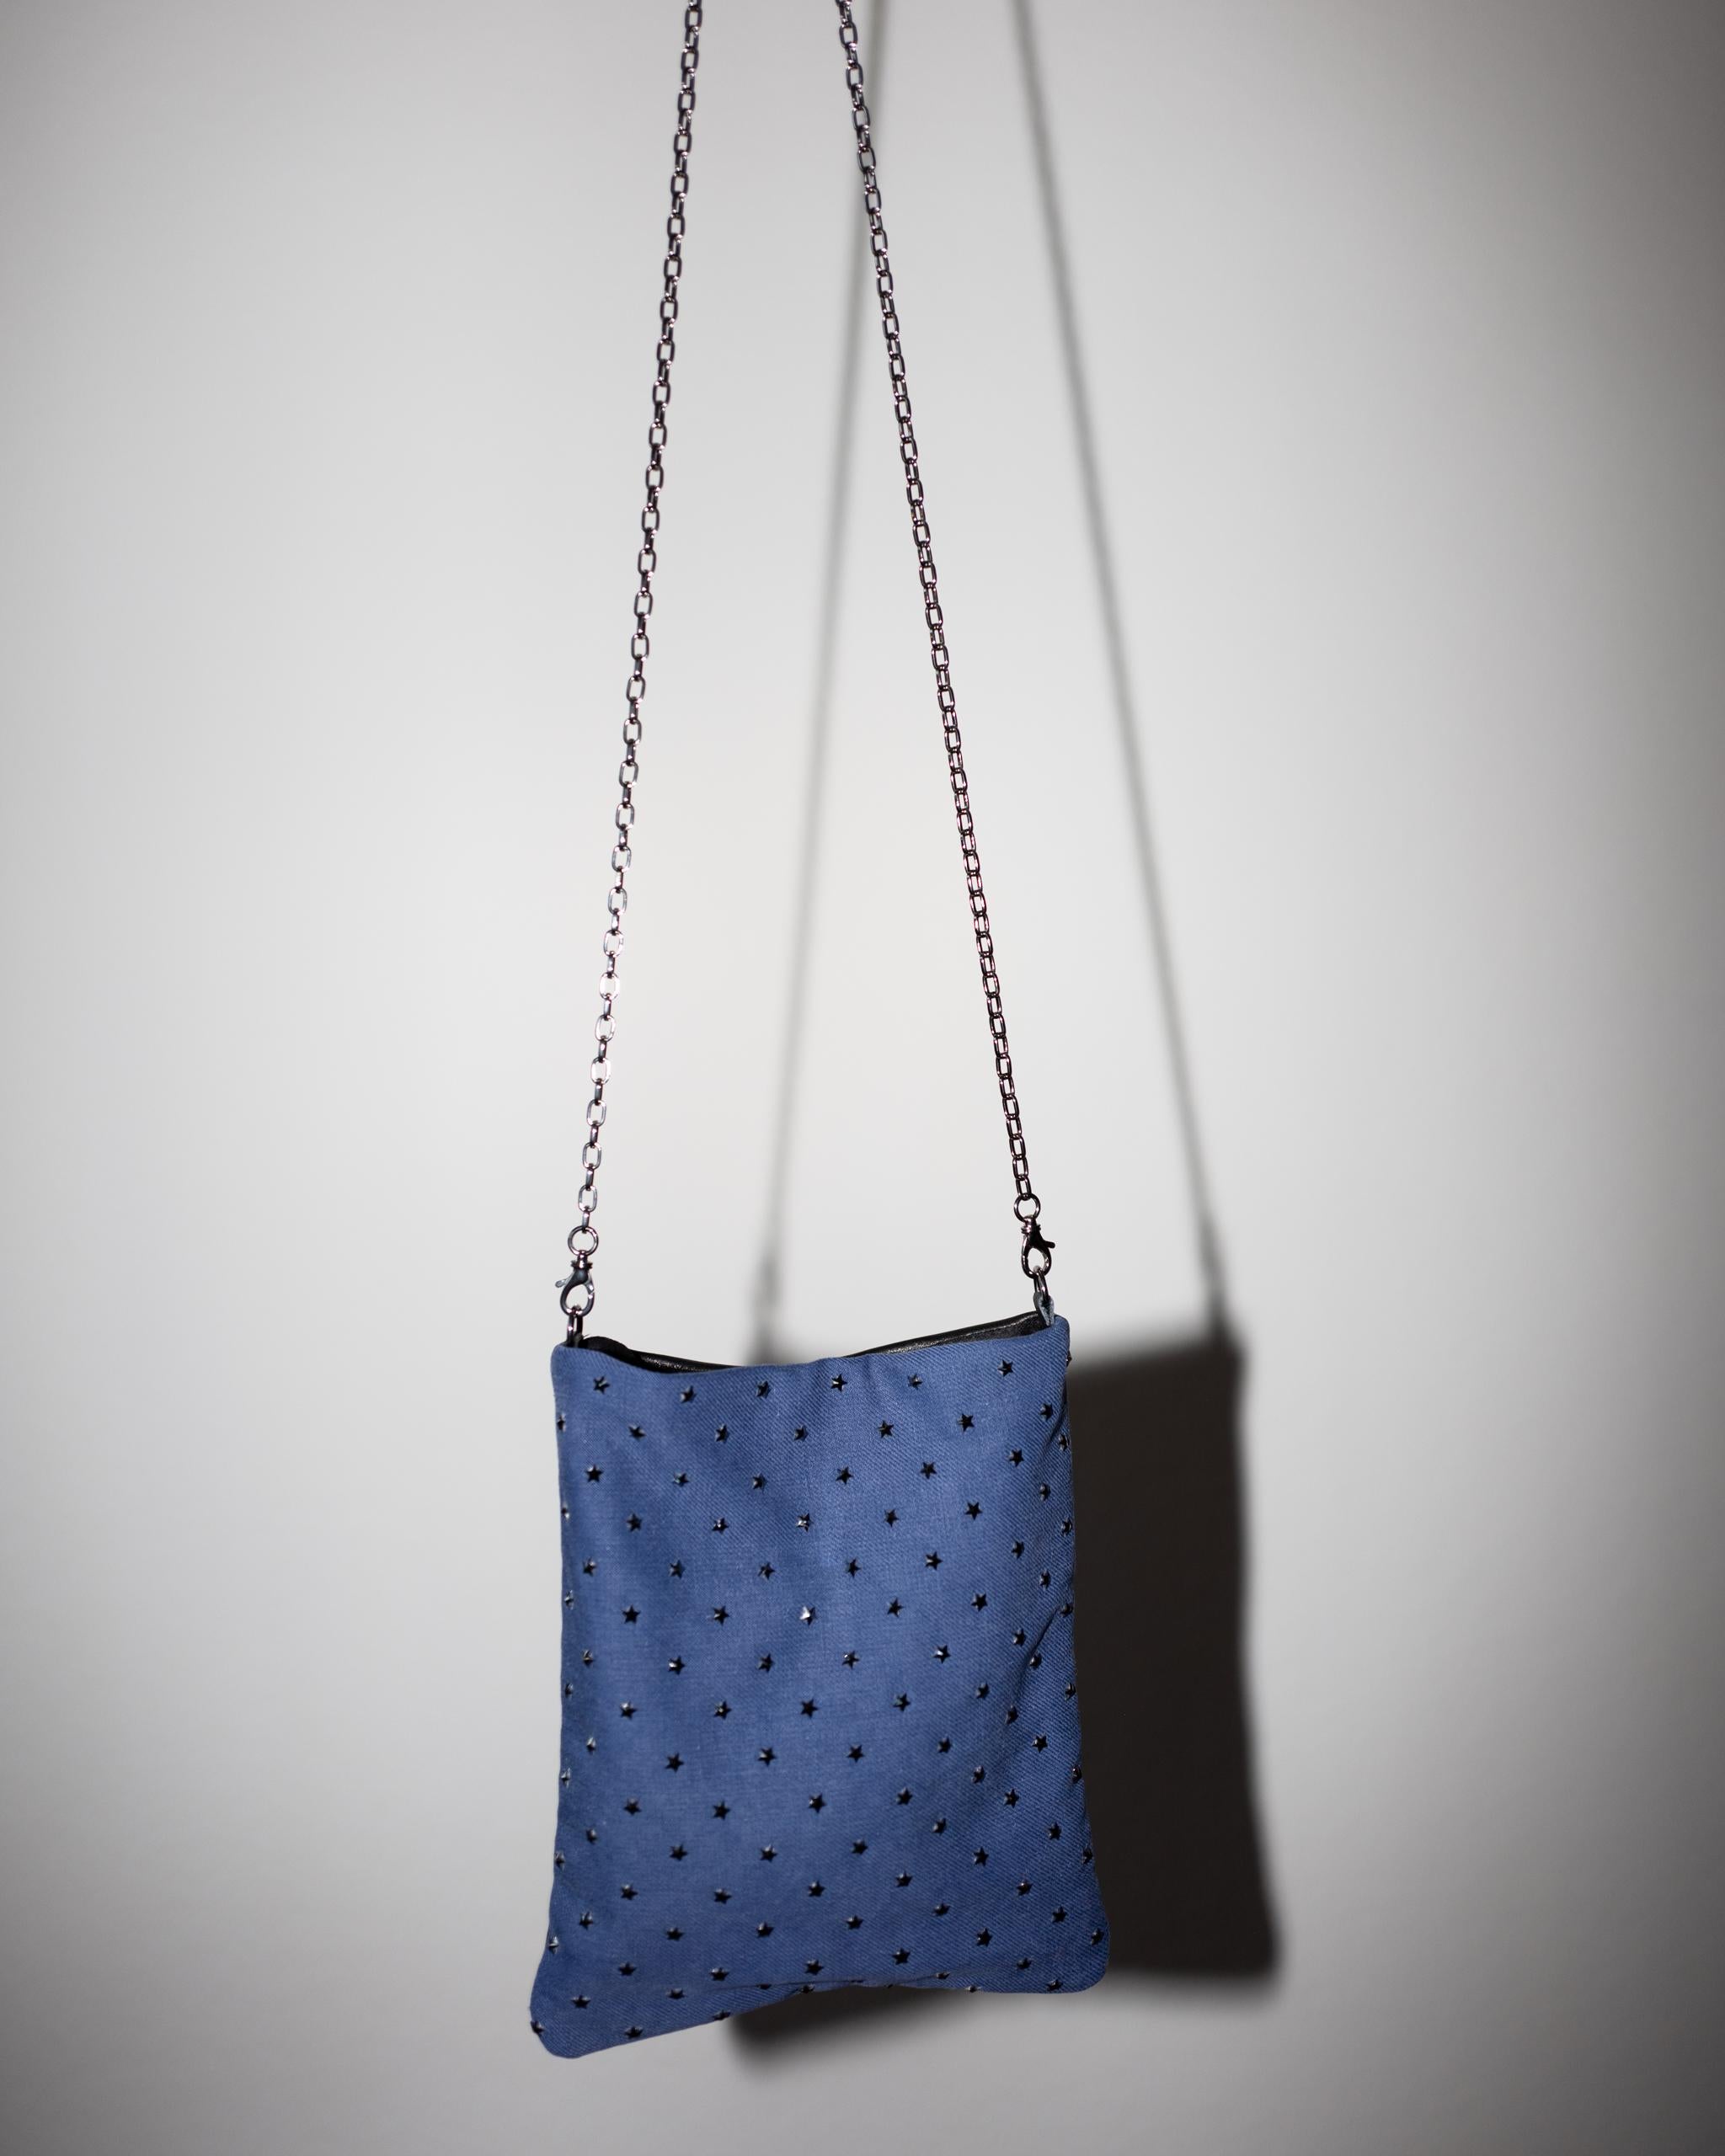 Women's Swarovski Crystal Star Evening Bag Blue Black Napa Leather Palladium Chain For Sale